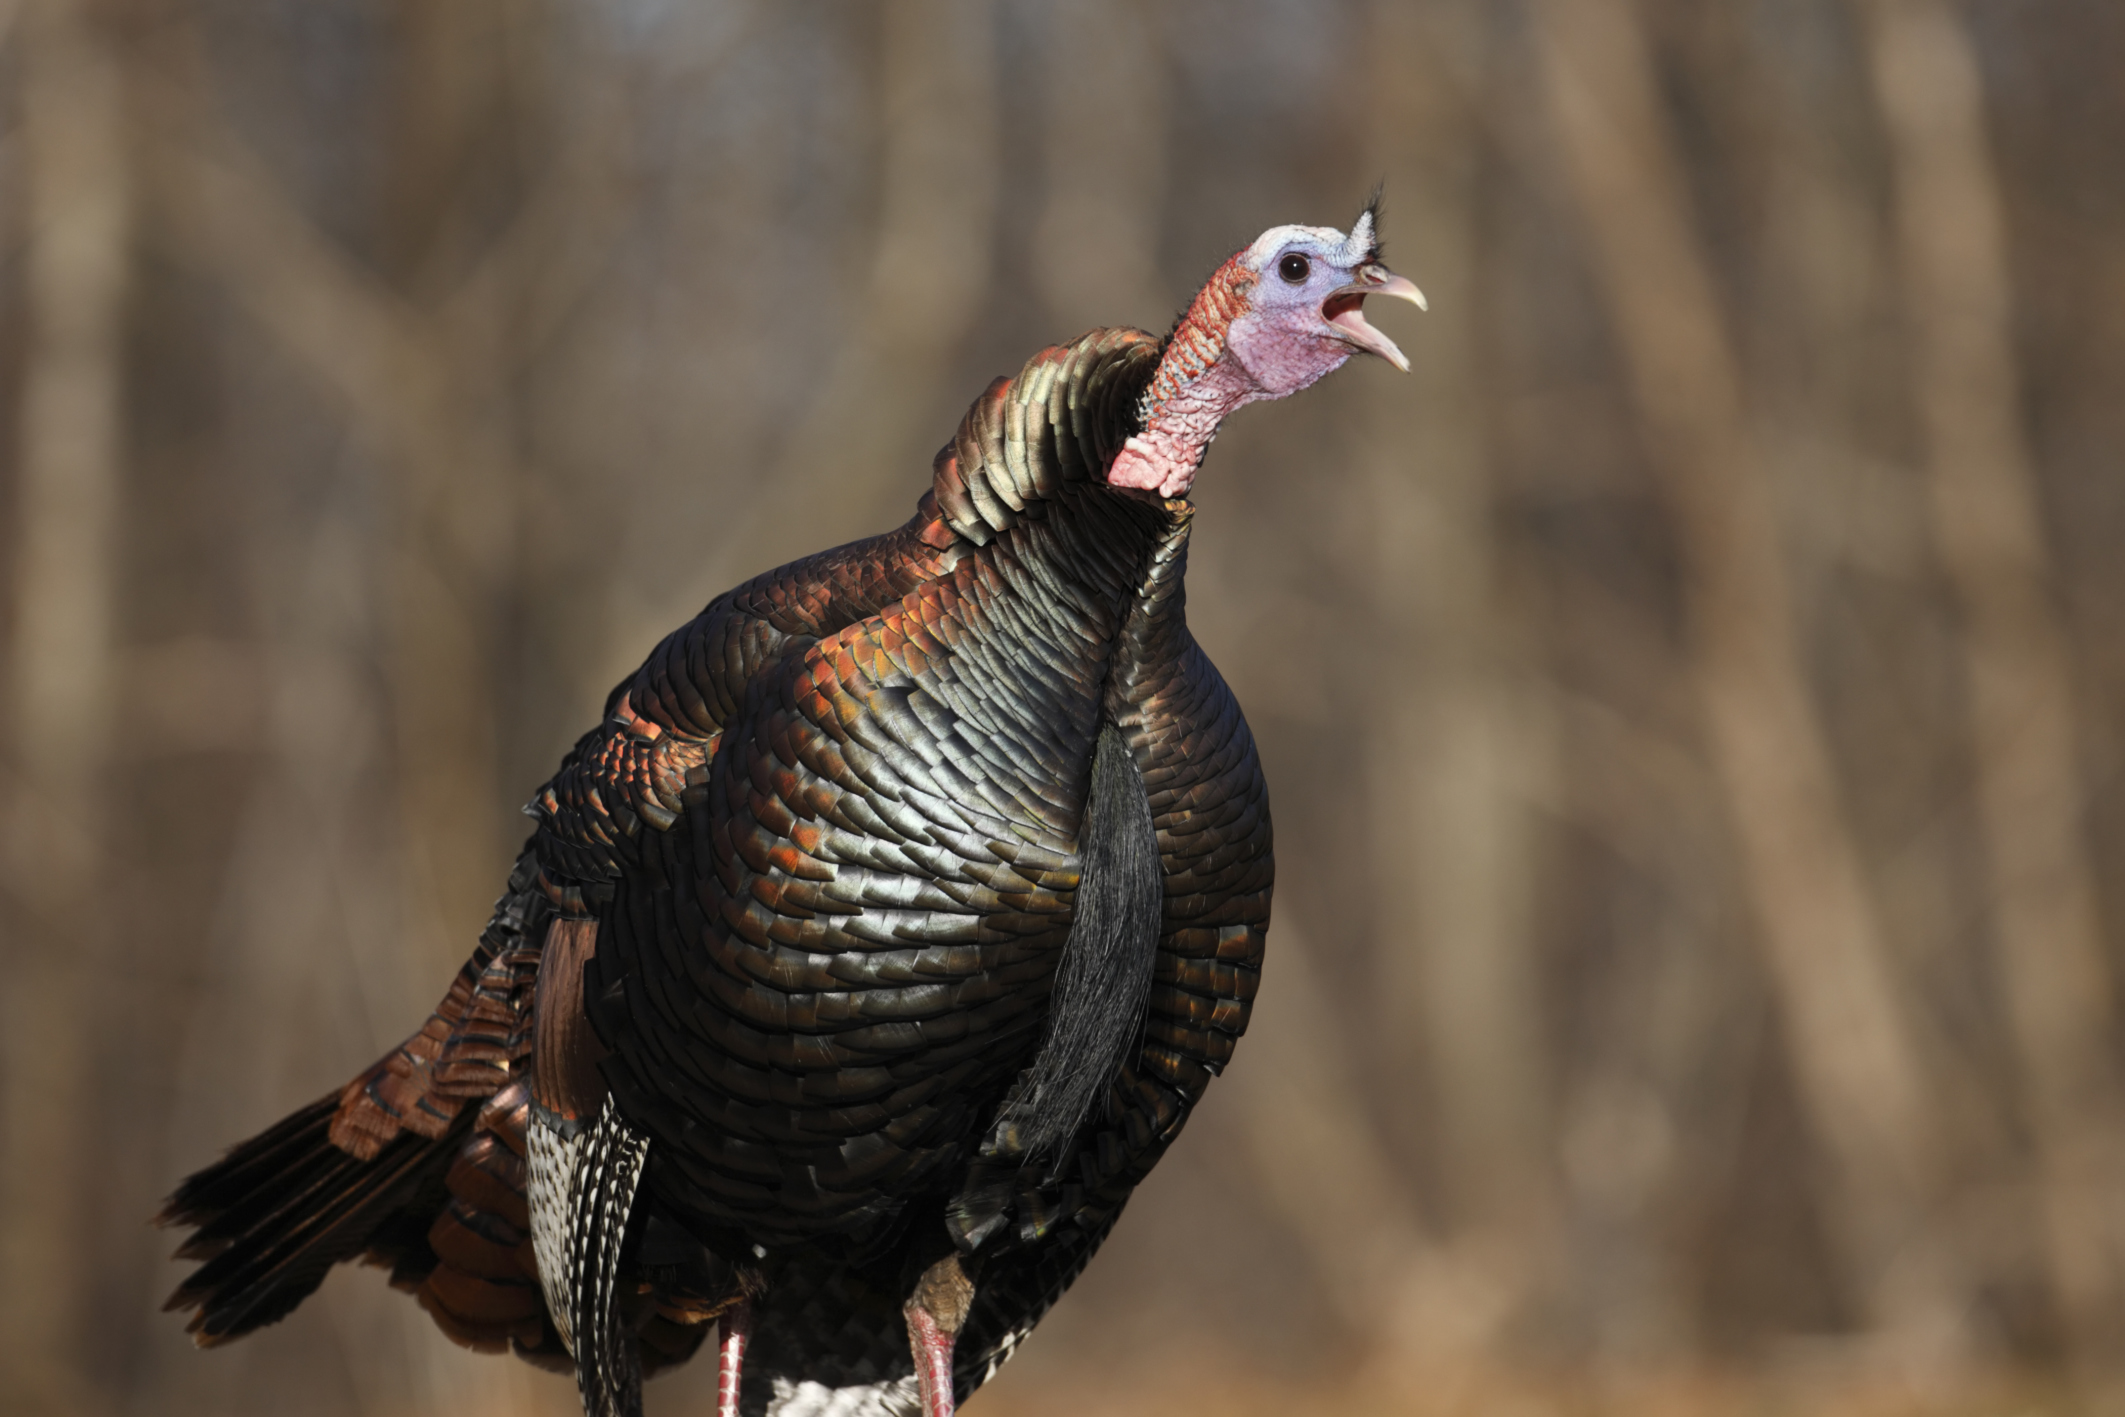 Ohio's wild turkey season opens for hunters this month